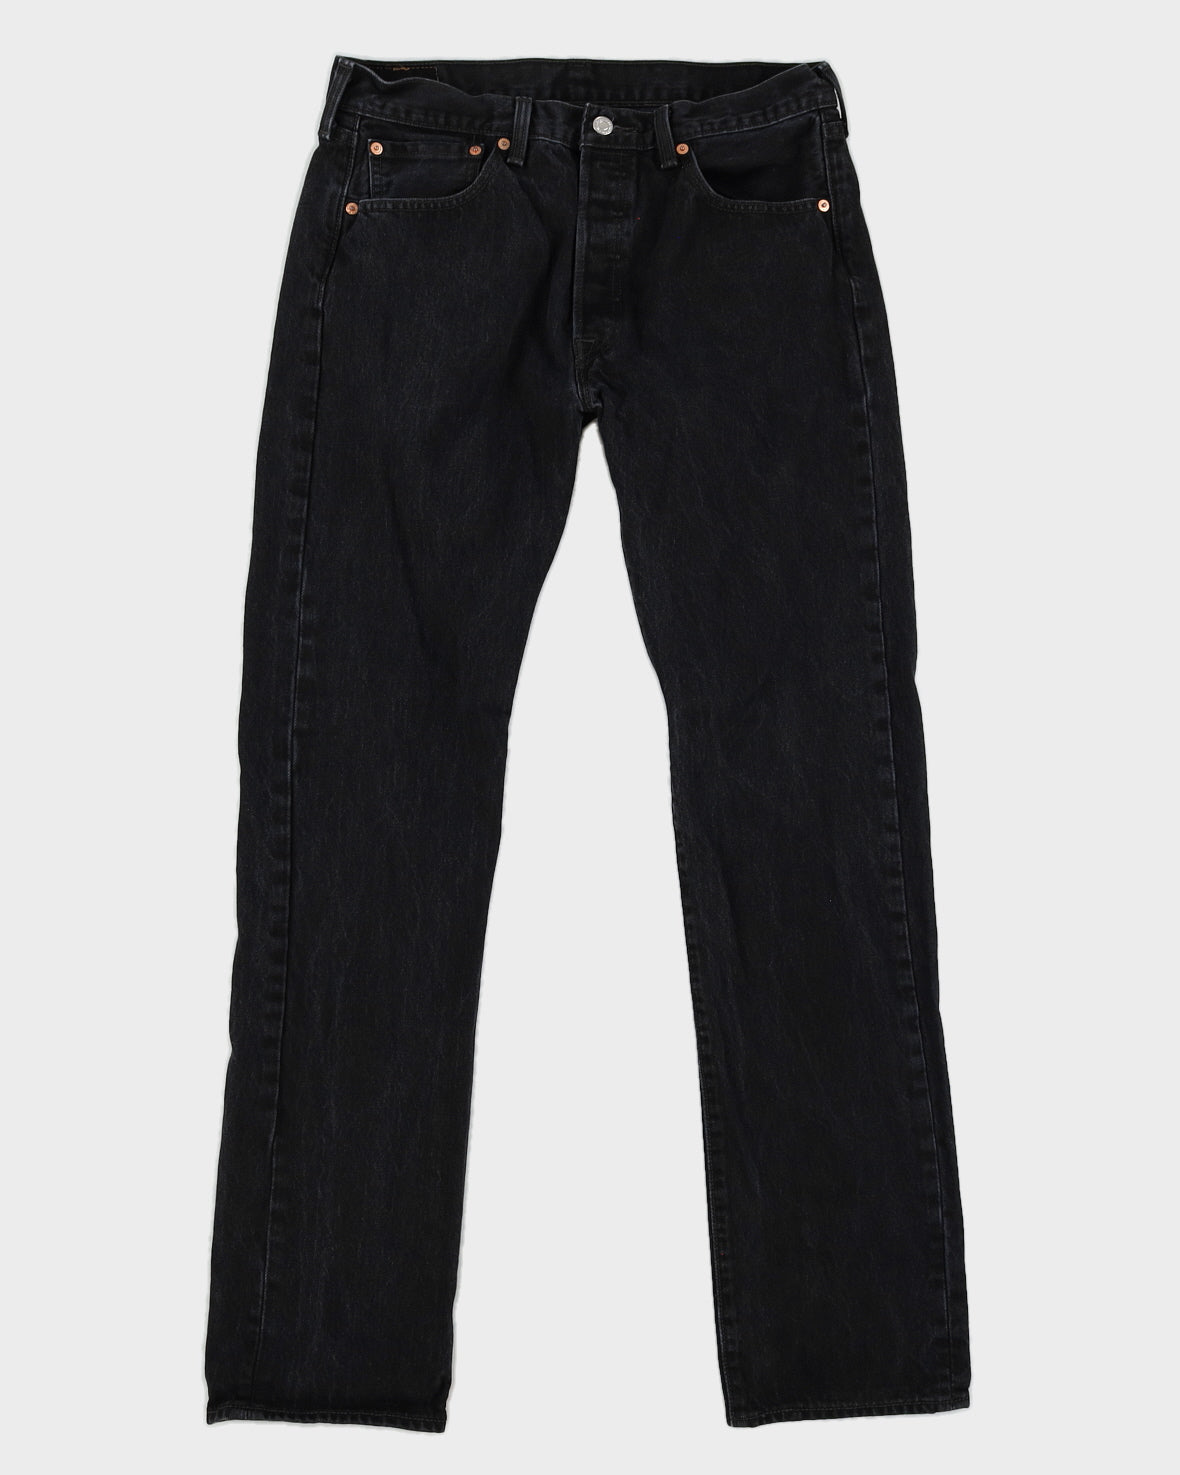 Levi's 501 Black Jeans - W33 L34